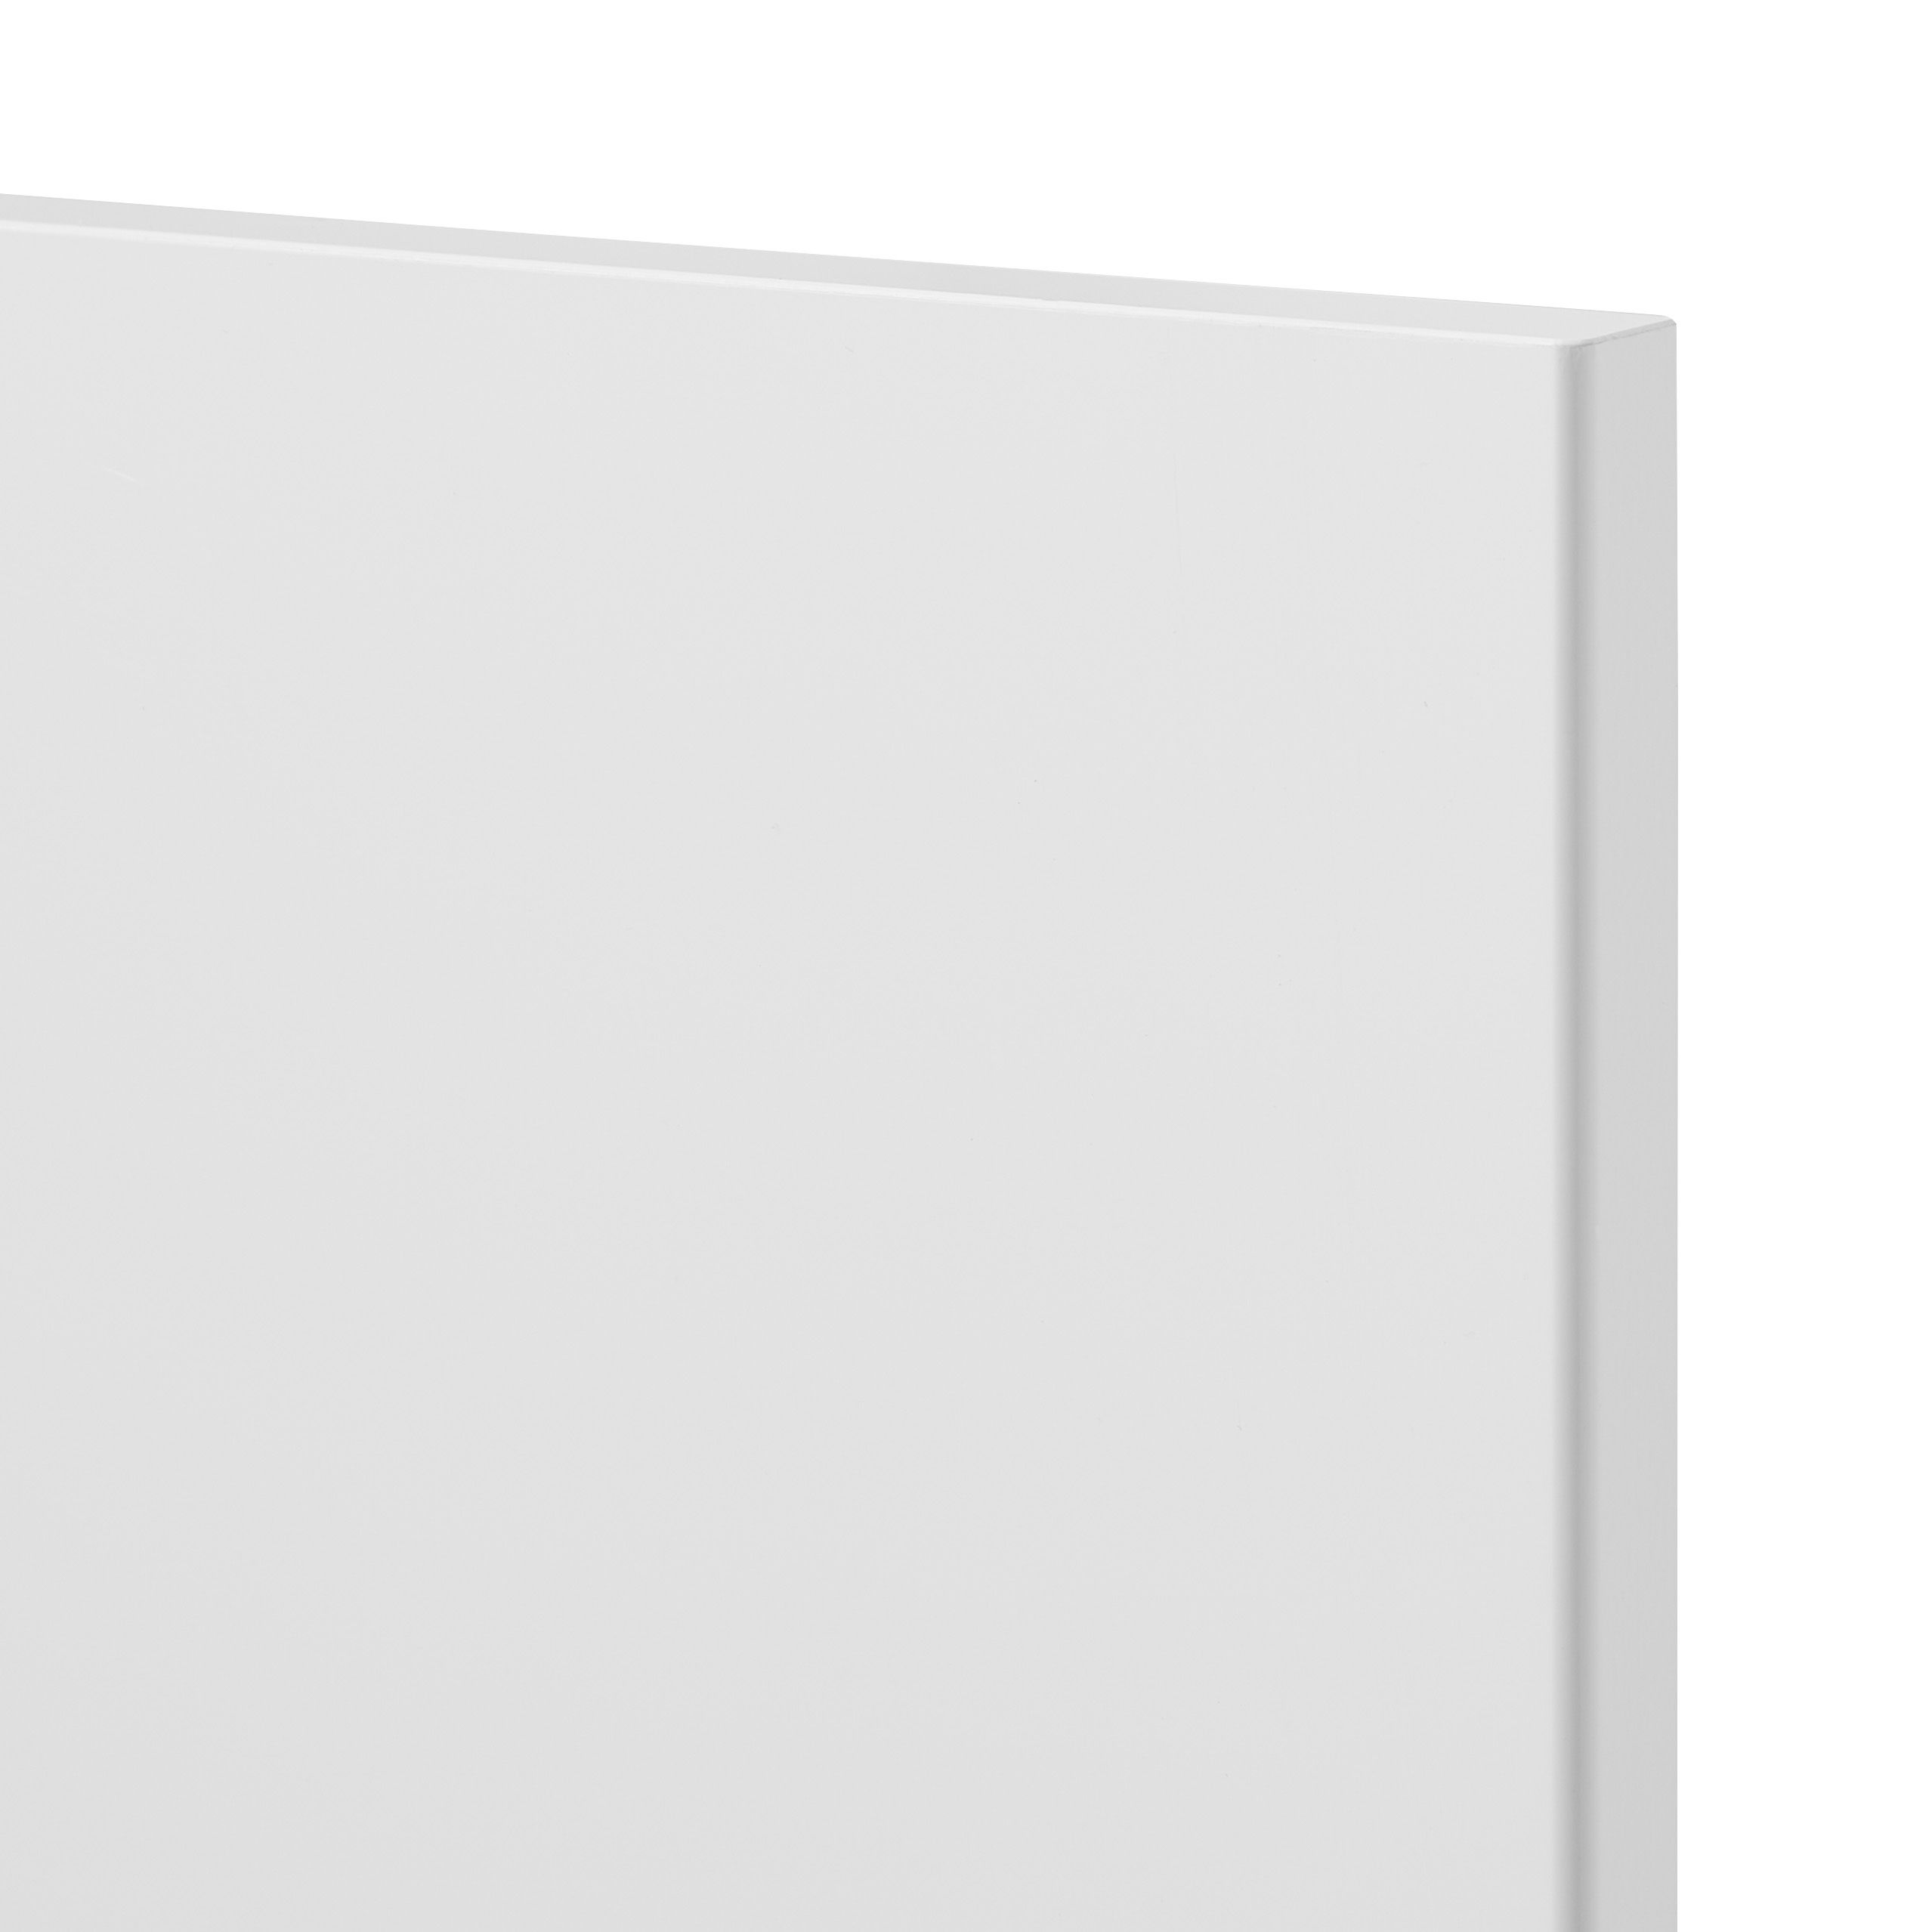 GoodHome Stevia Gloss white slab Drawer front, bridging door & bi fold door, (W)500mm (H)356mm (T)18mm